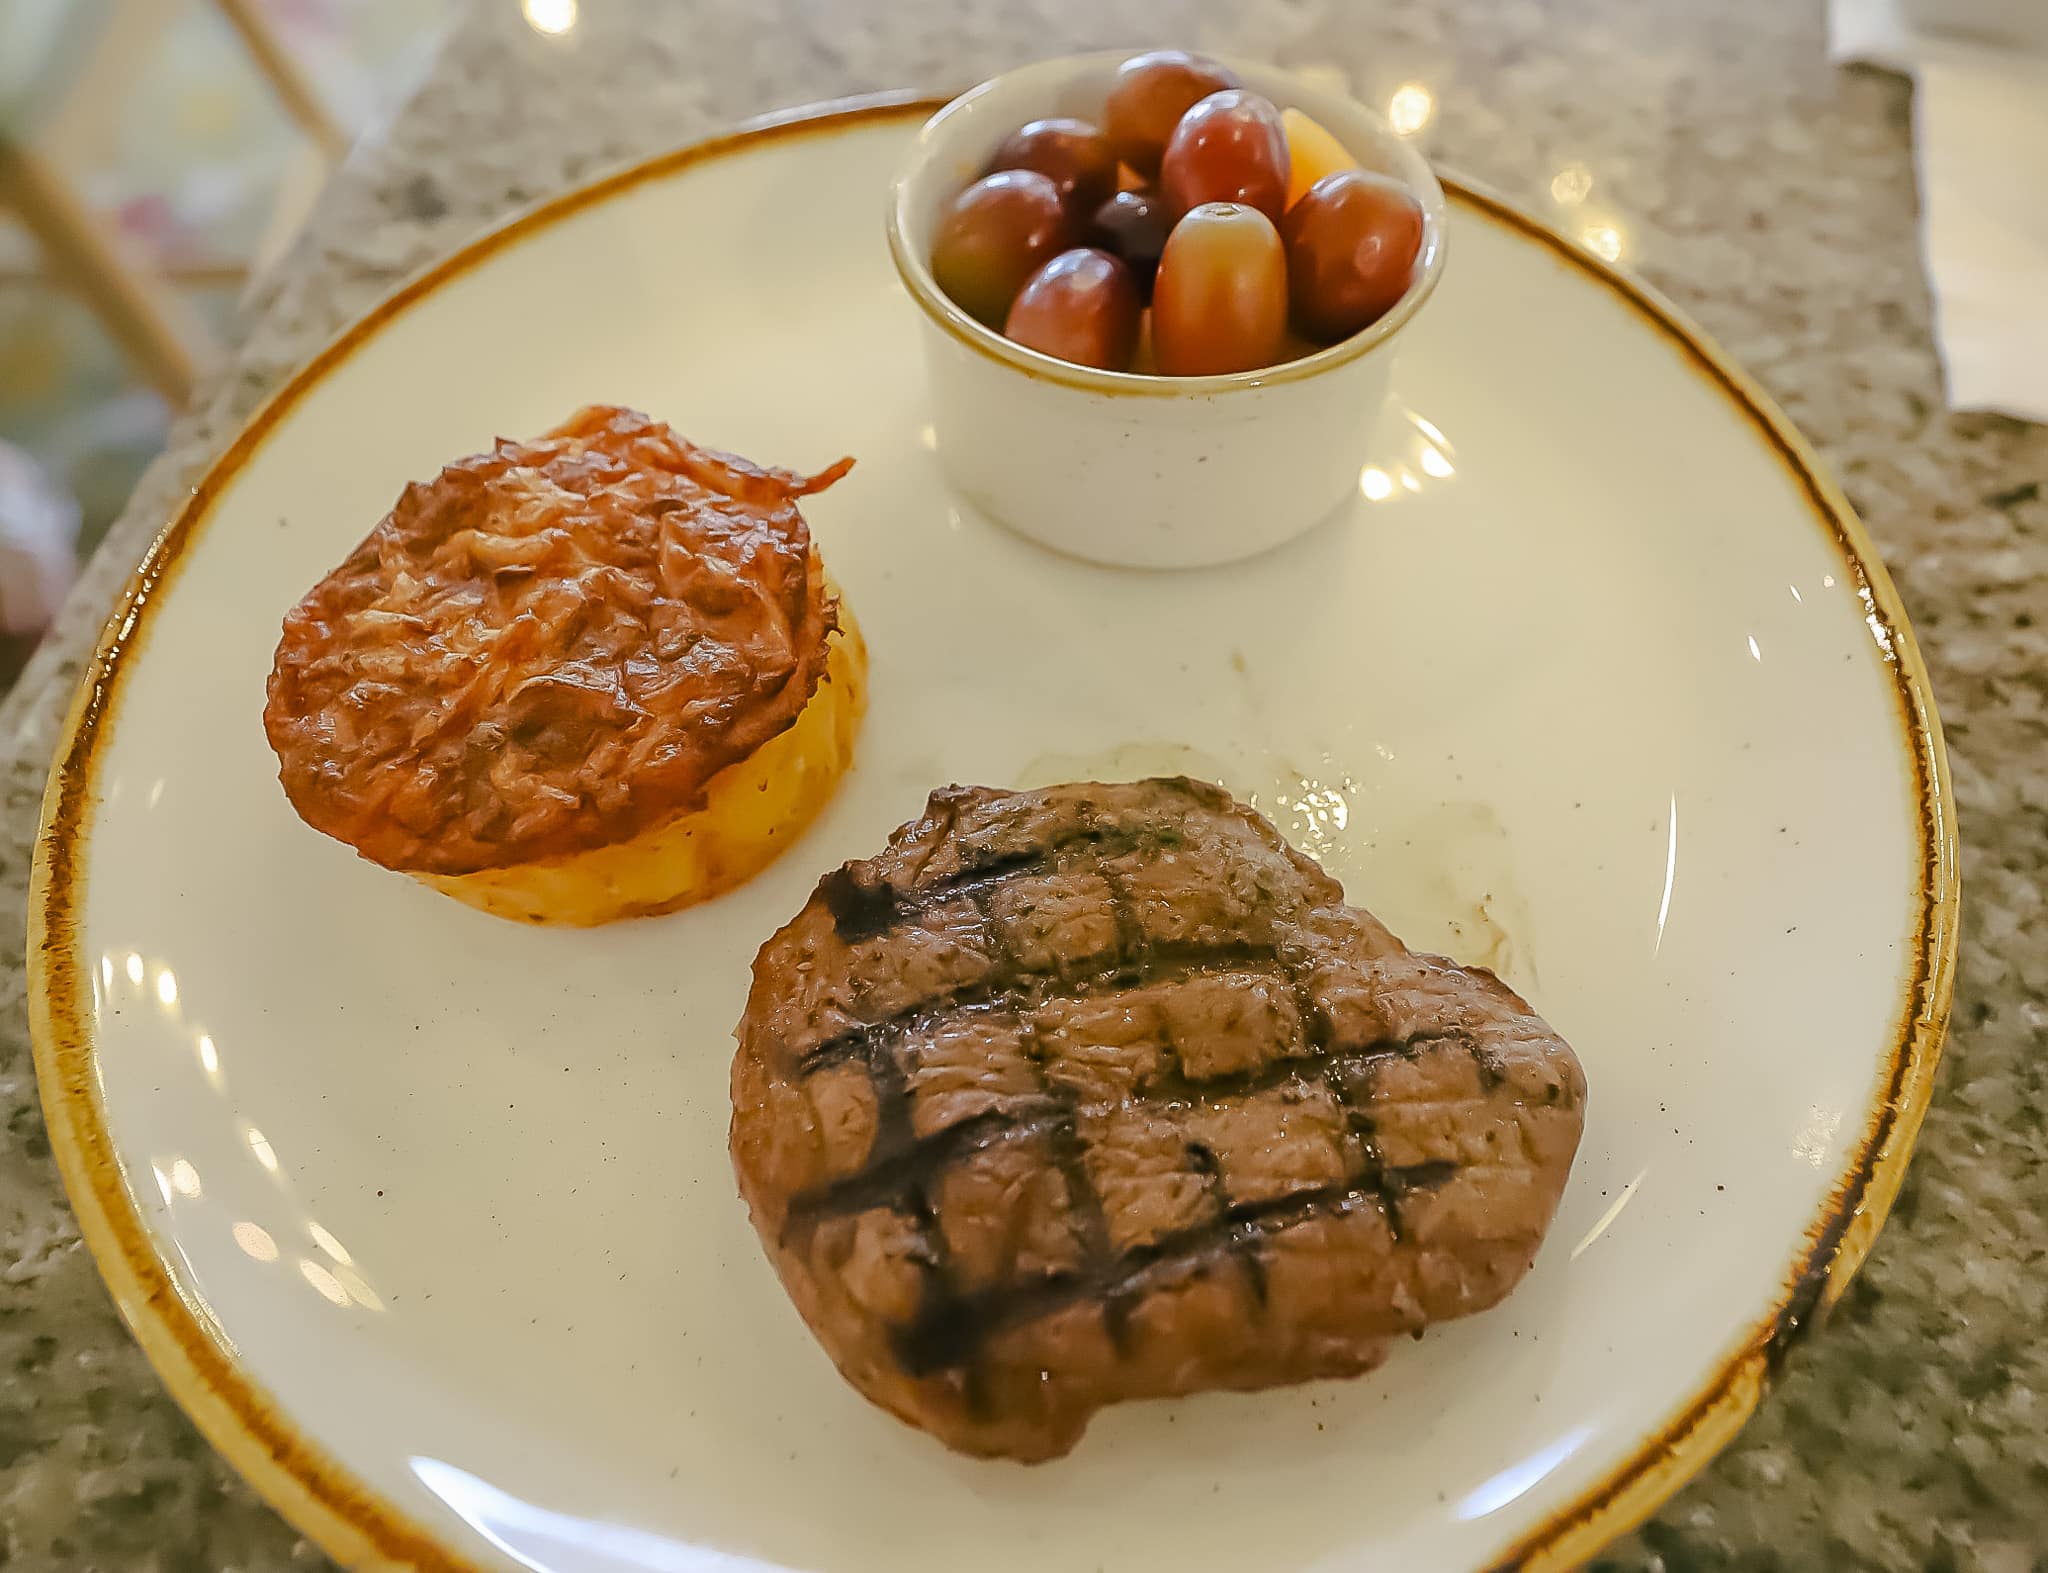 steak with cheesy potato casserole and grapes 